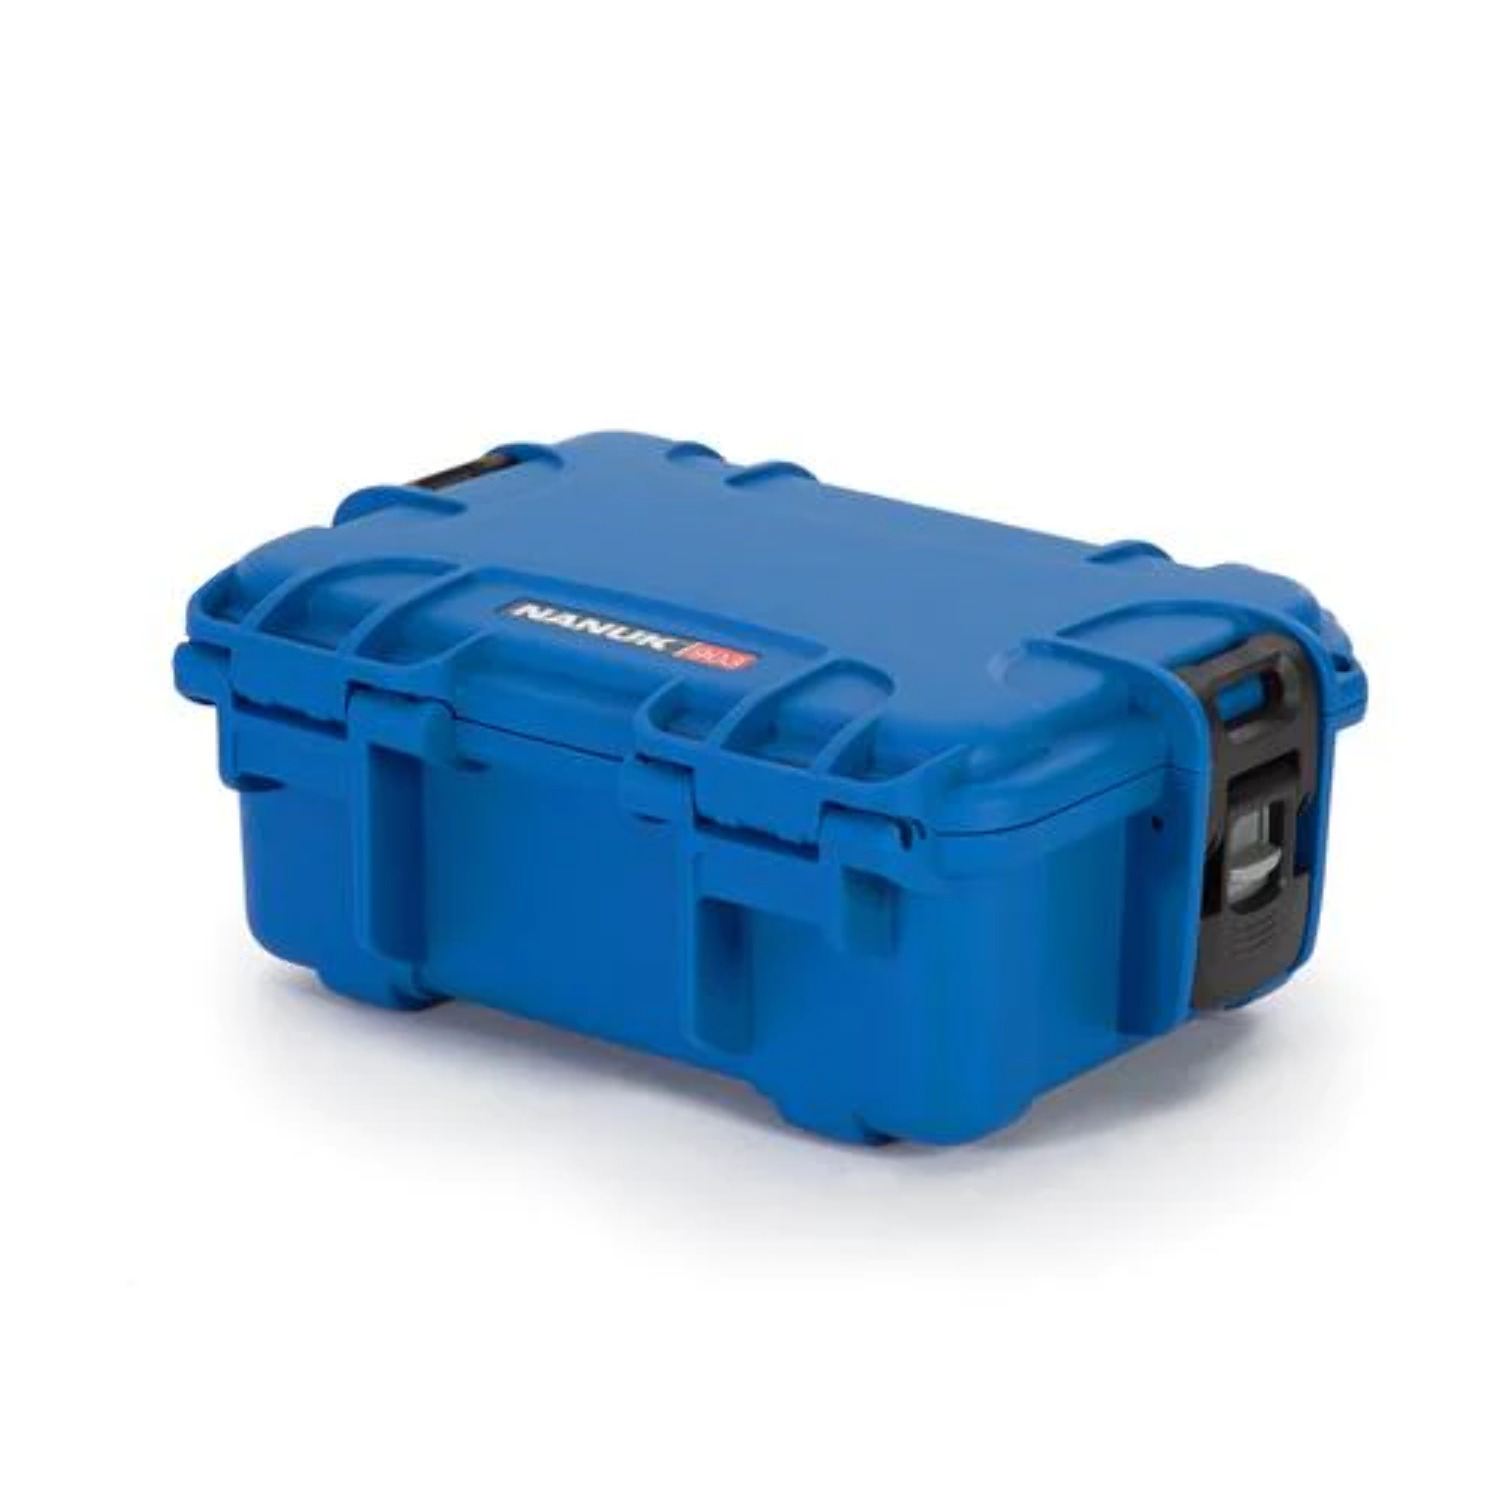 Nanuk 903-1006 Hard Plastic Waterproof Case with cubed foam insert - image 3 of 11